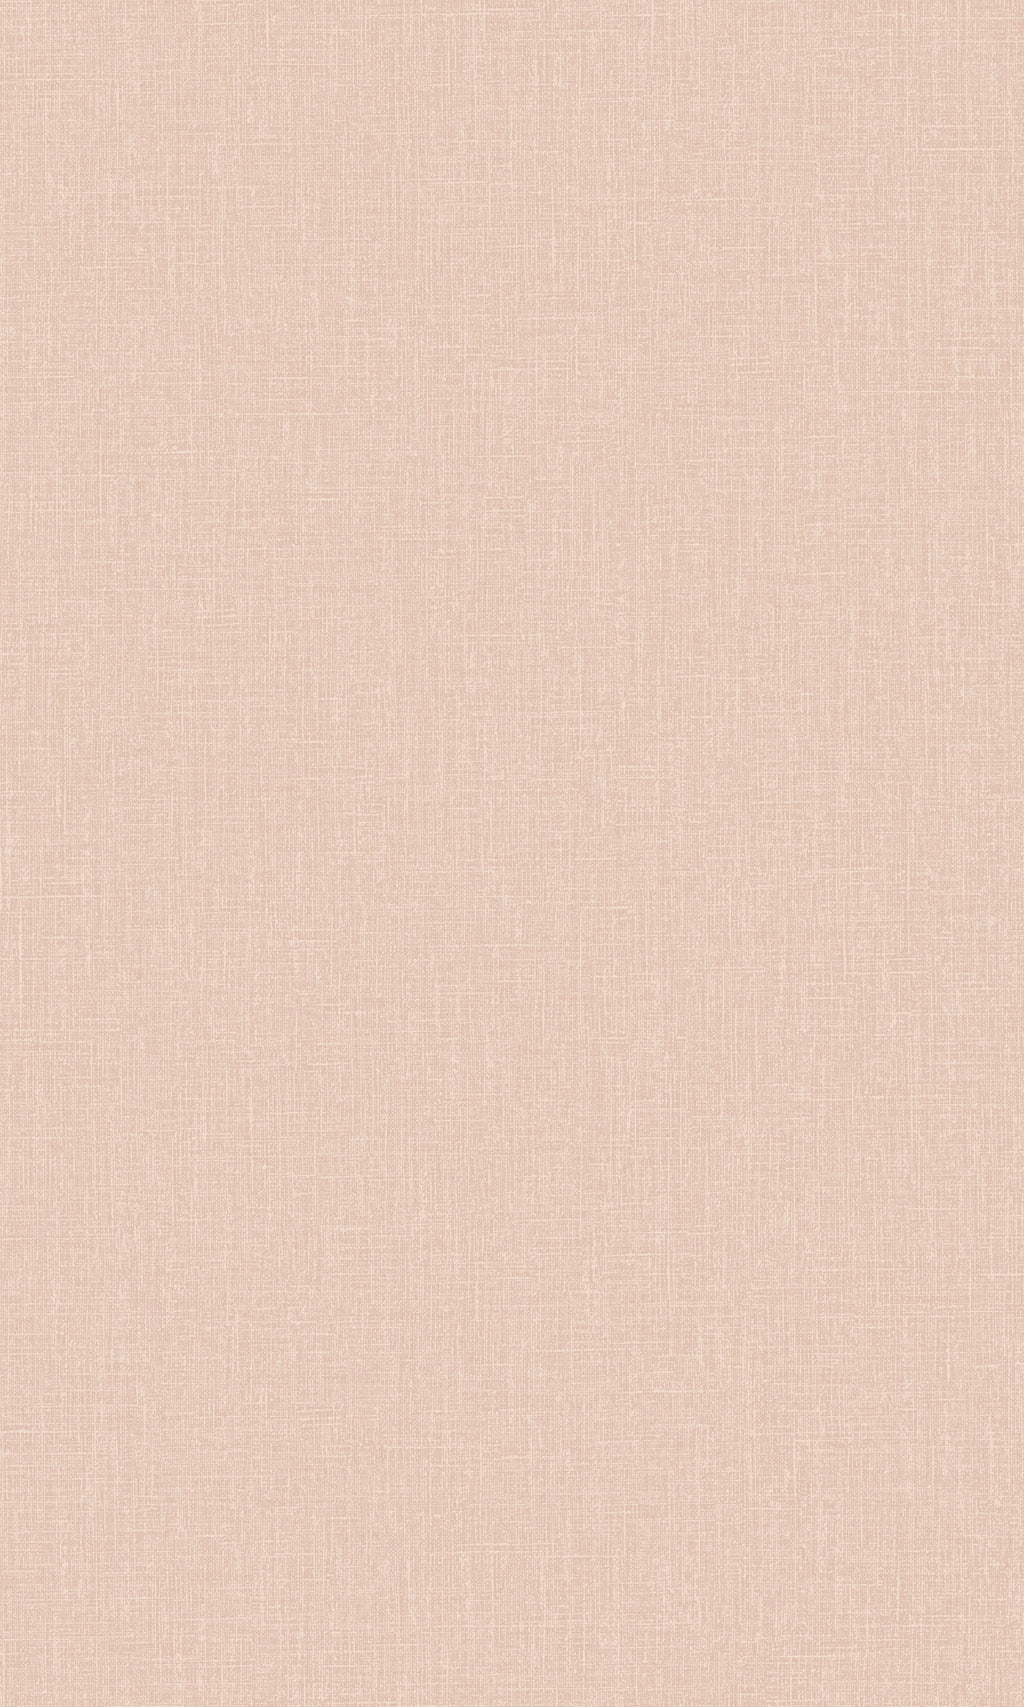 Atmosphere Pink Textile Plain AT1019